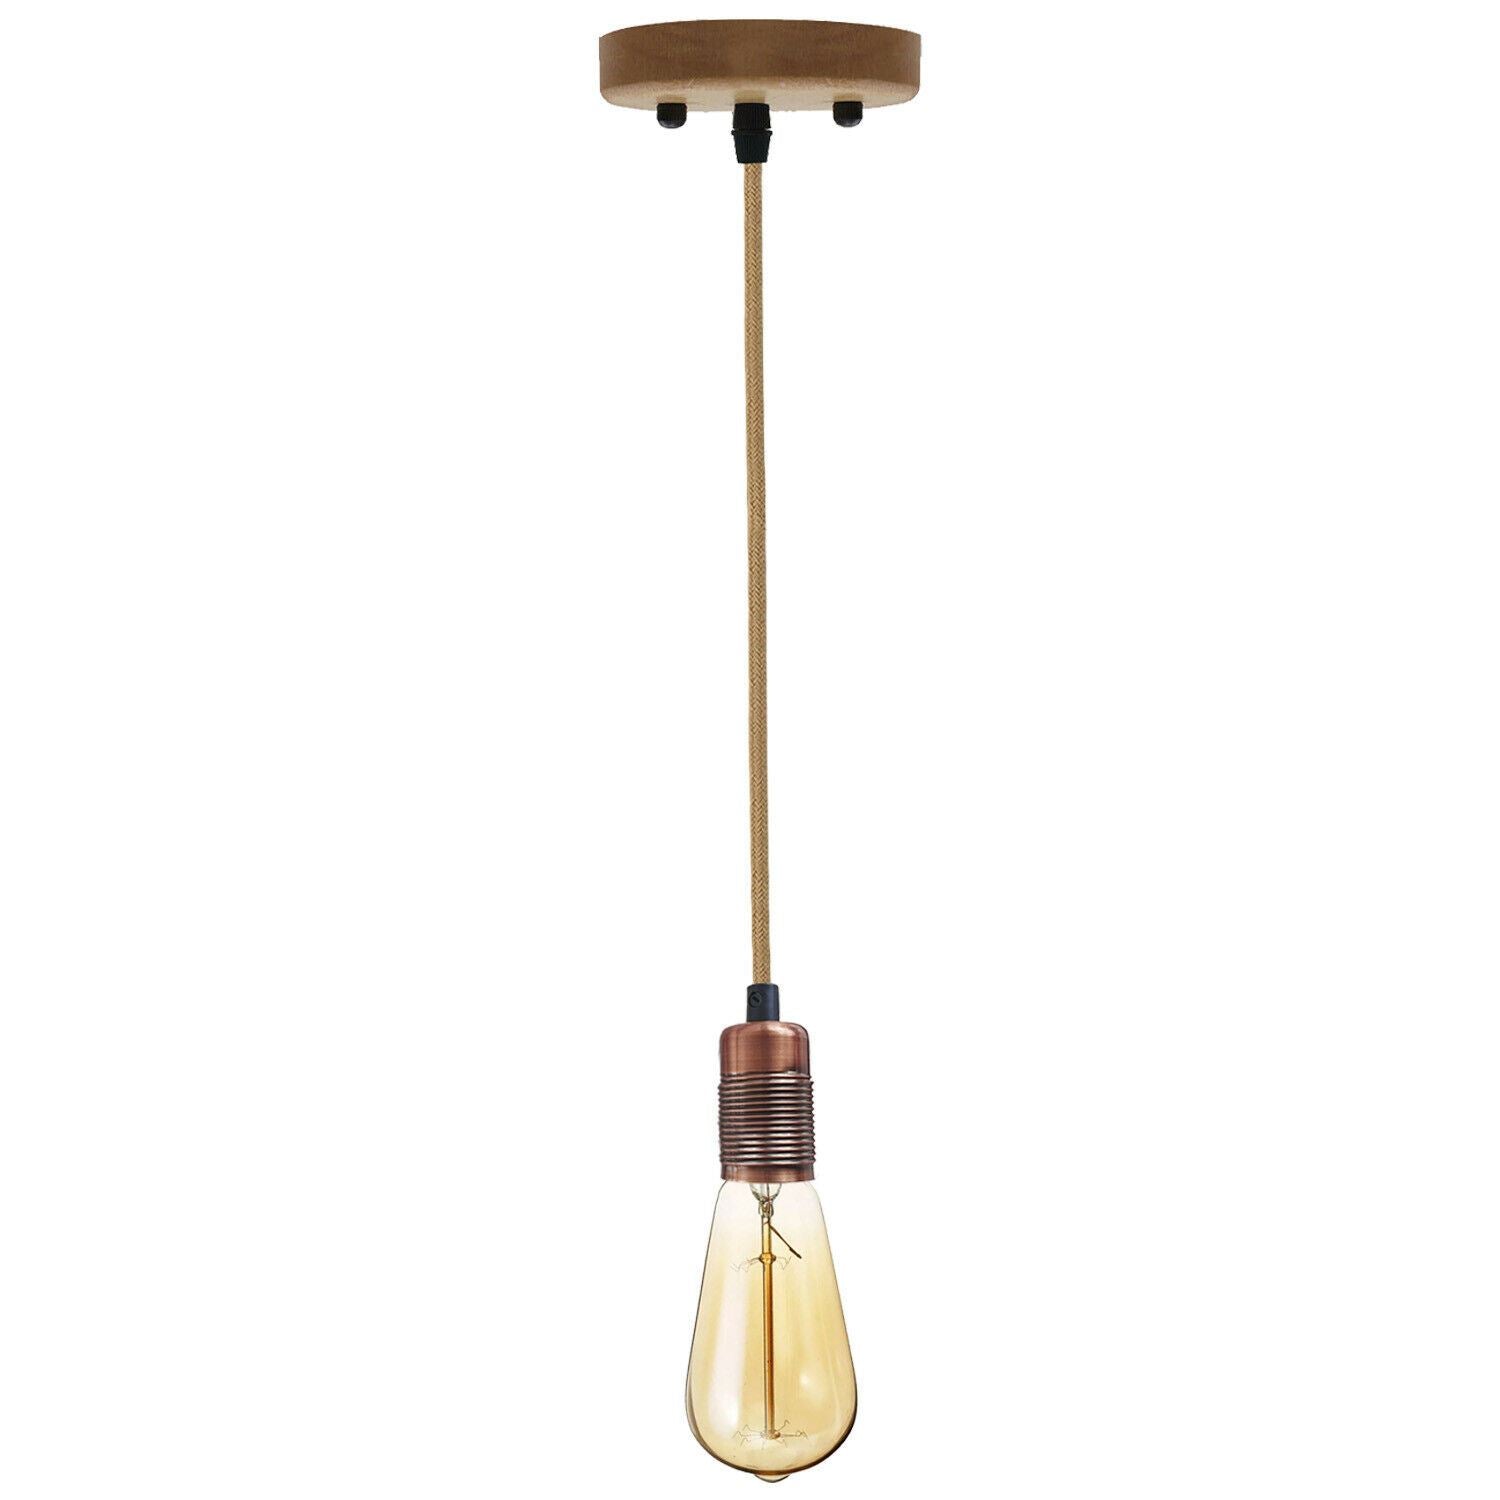 Vintage Industrial E27 Bulb Holder Screw Ceiling Rose Lamp Hemp Pendant Indoor Hanging Light Fitting Conservatory, Dining Room, Foyer, Garage~1191 - LEDSone UK Ltd